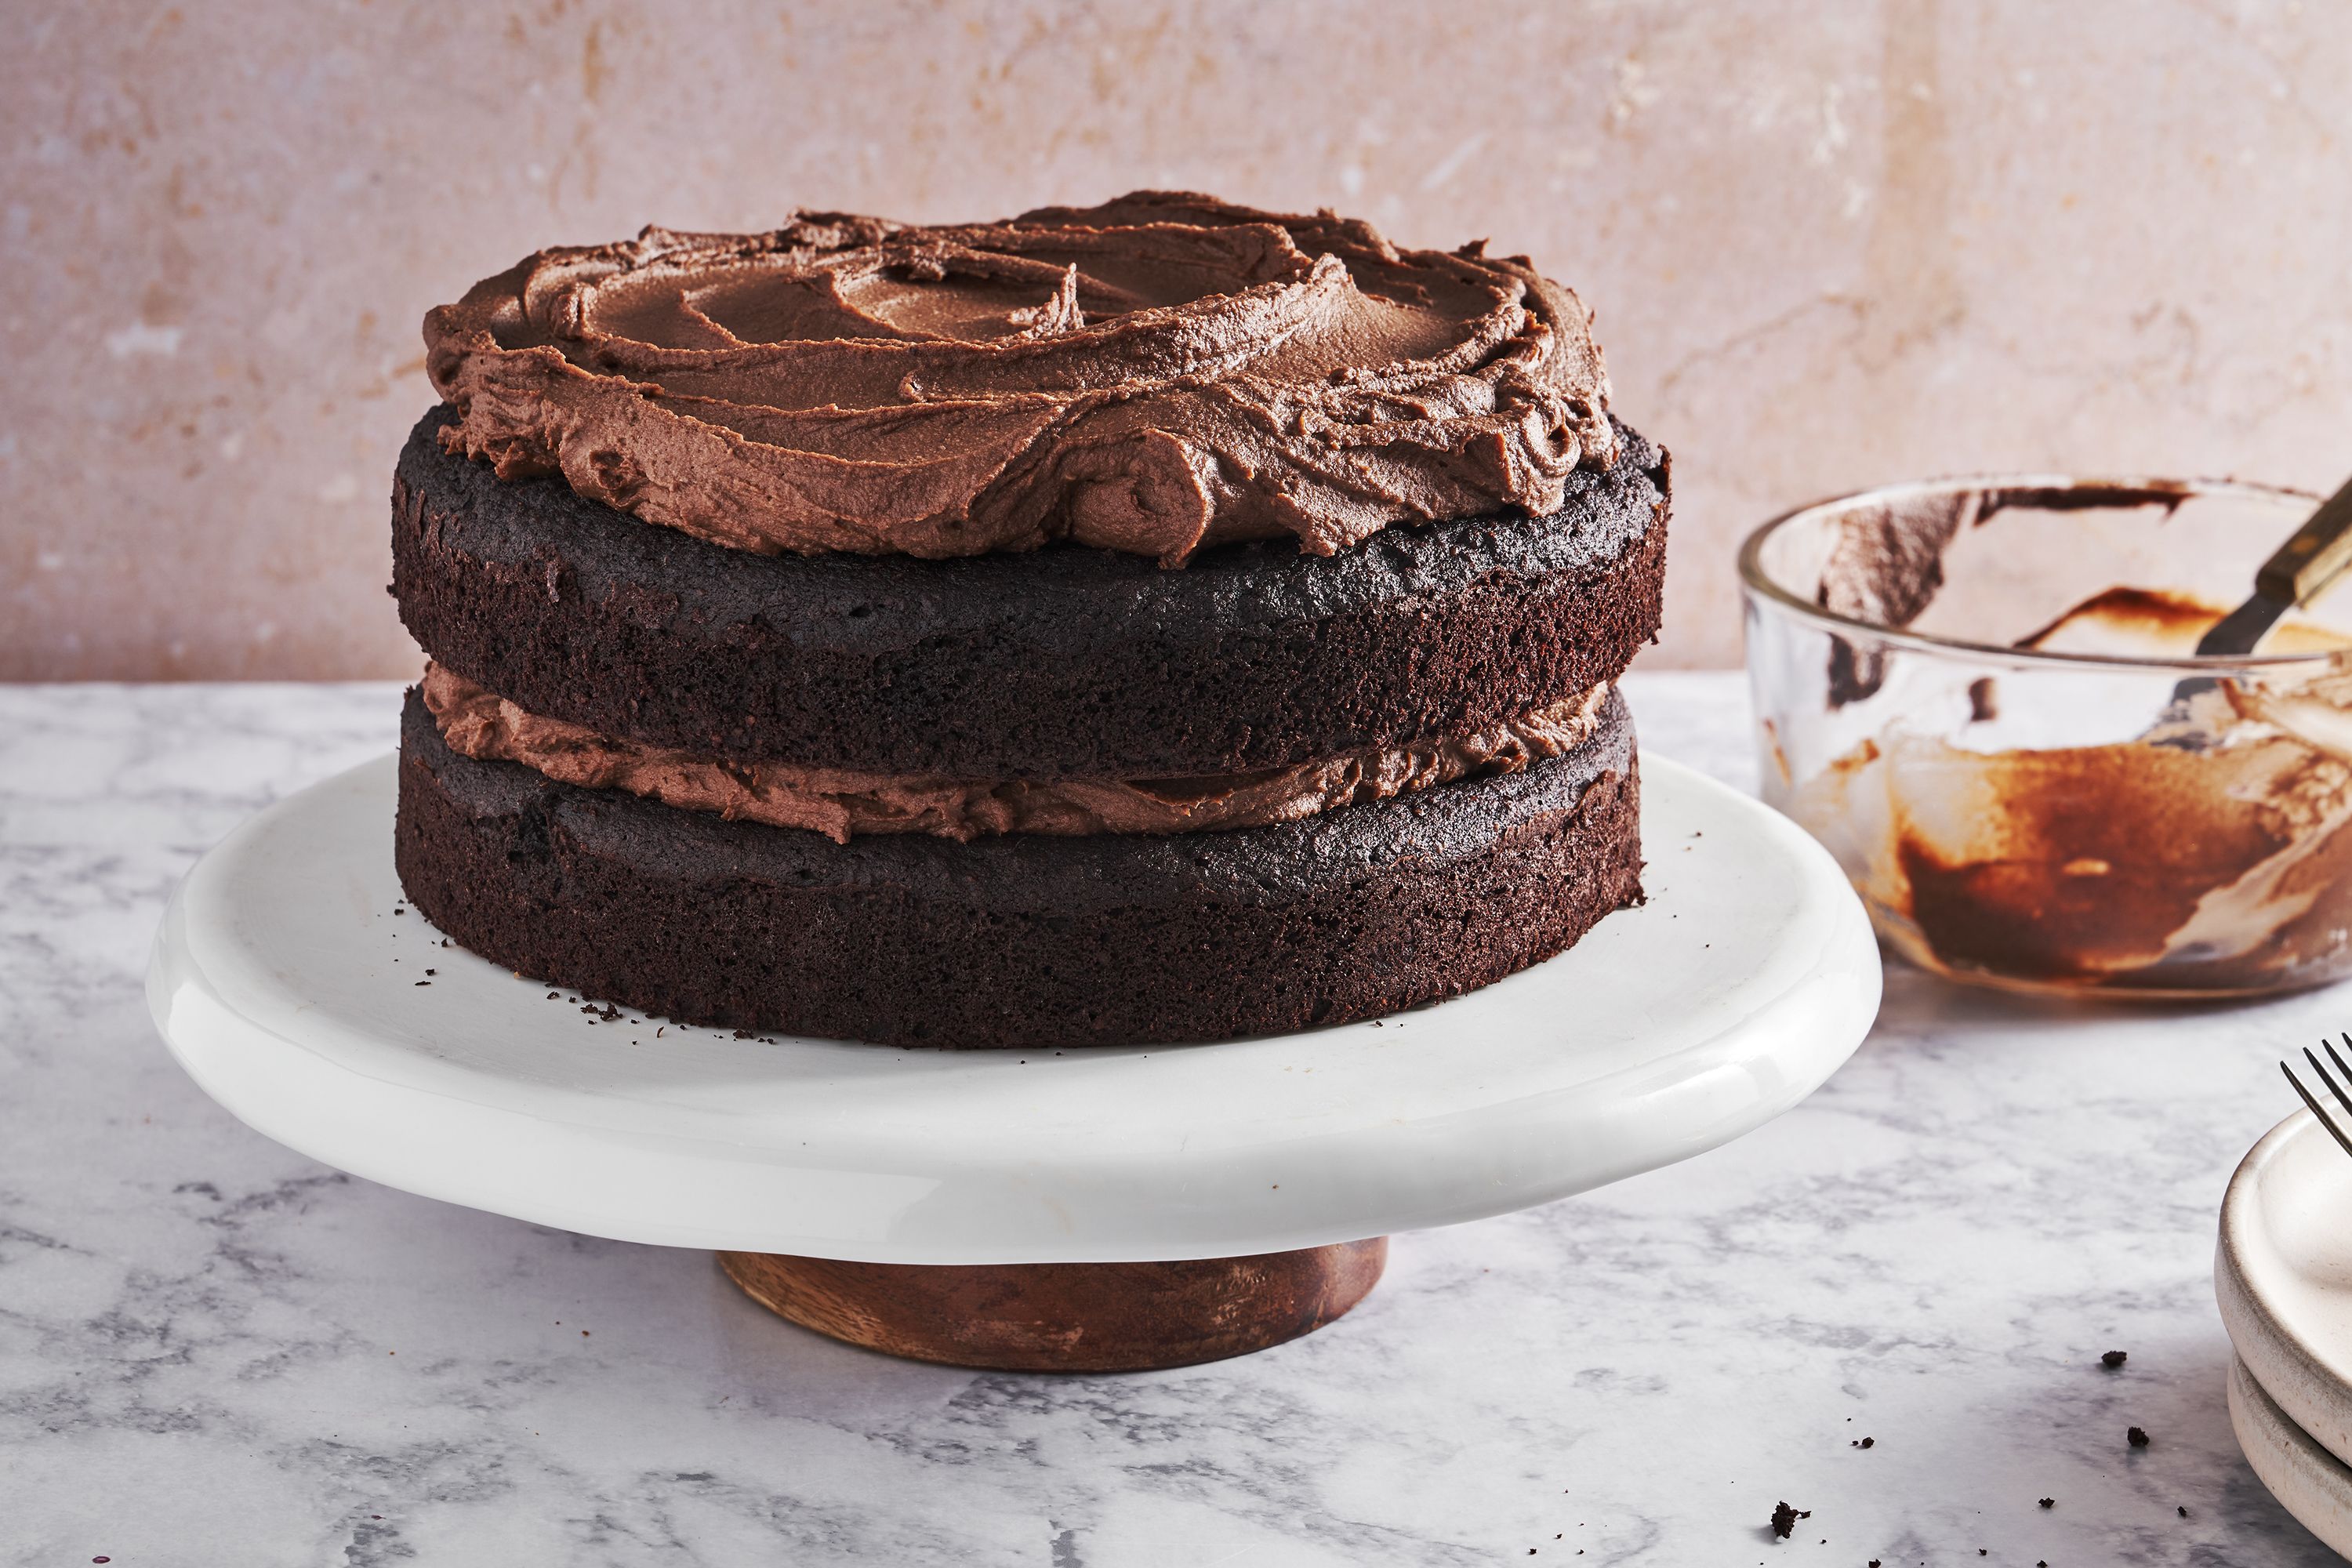 Best Keto Chocolate Cake With Low Carb Frosting - Keto Yum | Recipe | Keto  dessert recipes, Keto chocolate cake, Dessert recipes easy